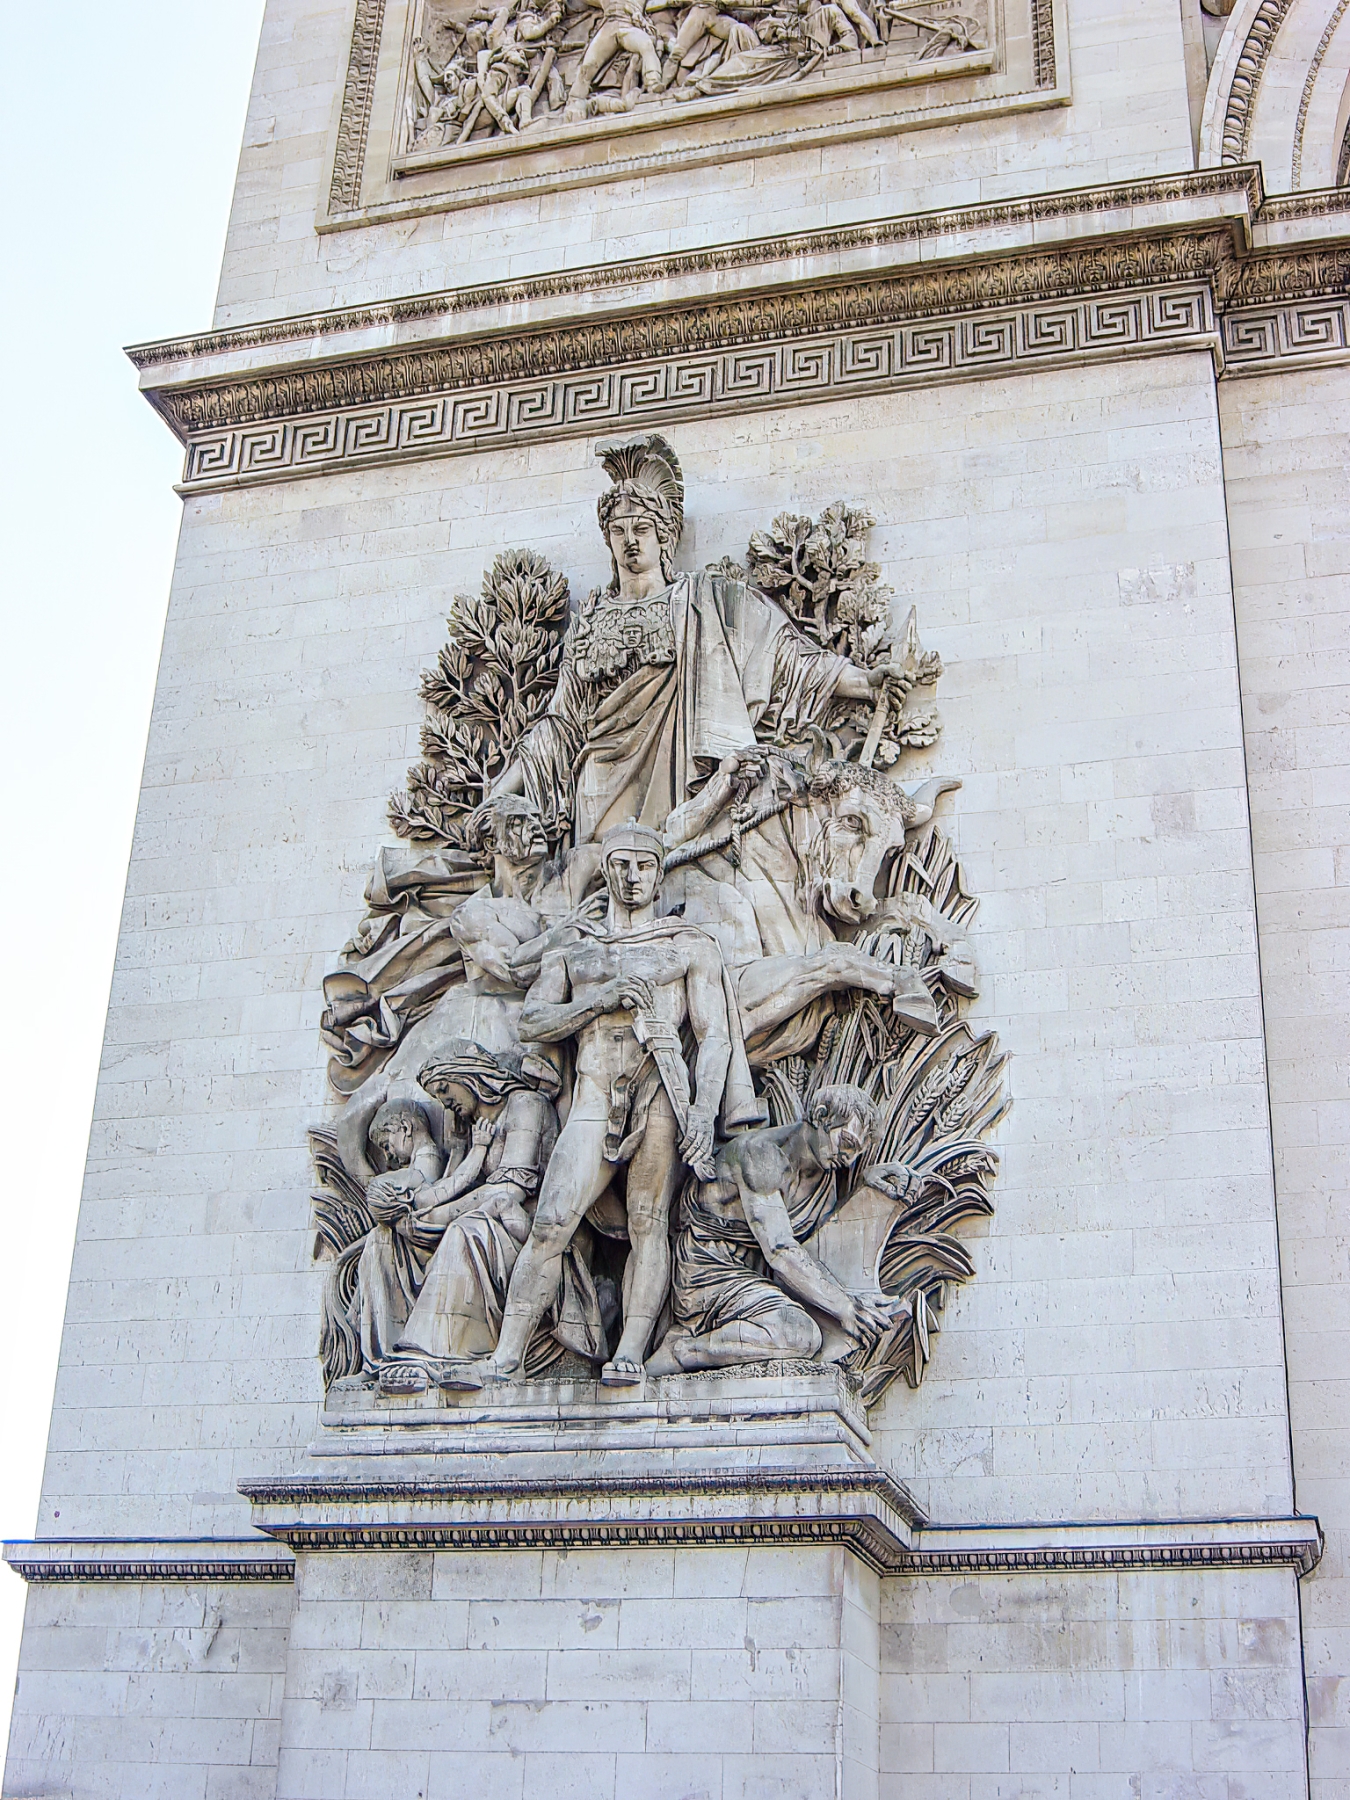 Arc de Triomphe Paris Sept 2007